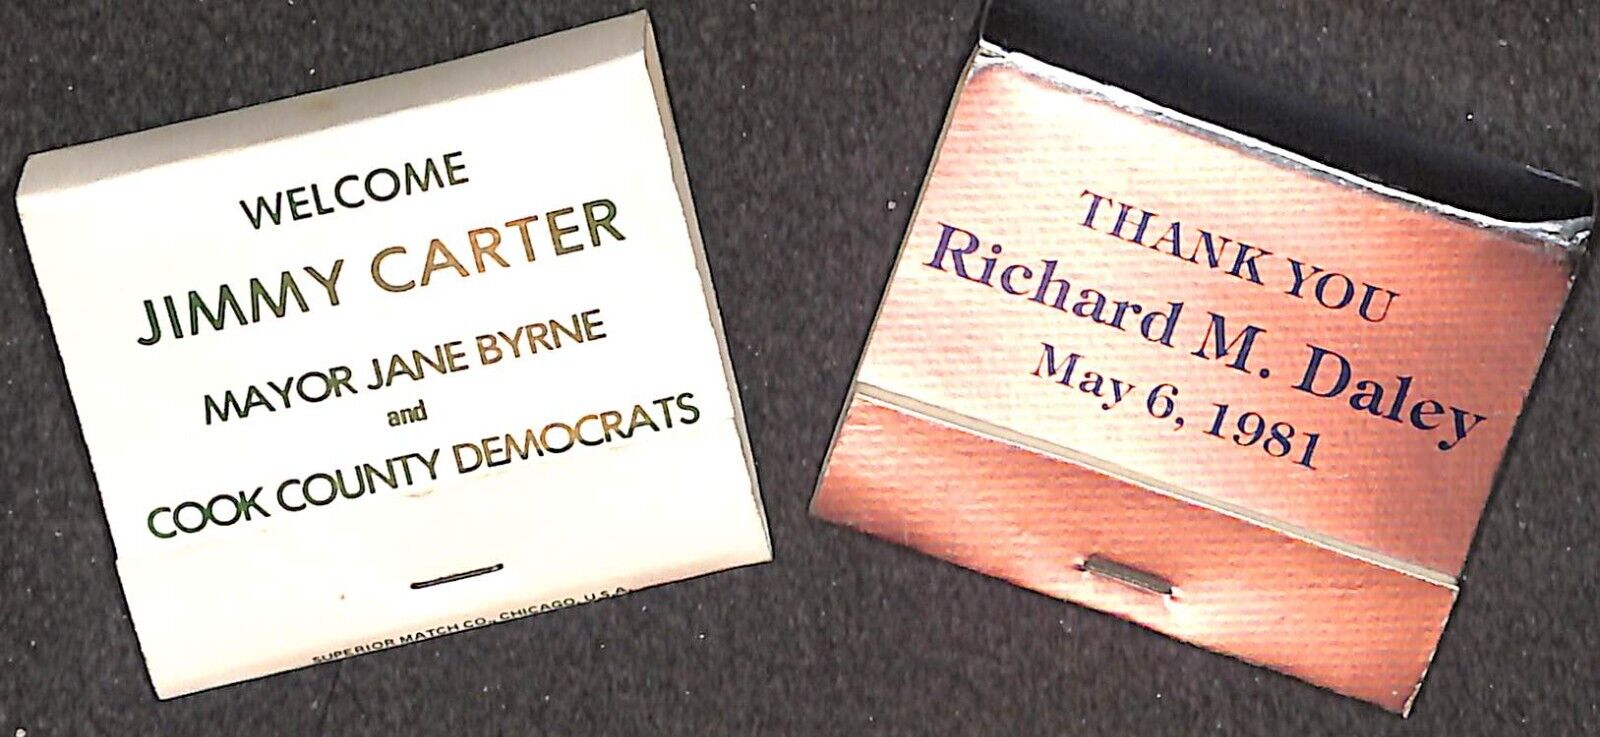 Set of 2 Matchbooks from Chicago Mayor Richard Daley & Jane Byrne & Jimmy Carter